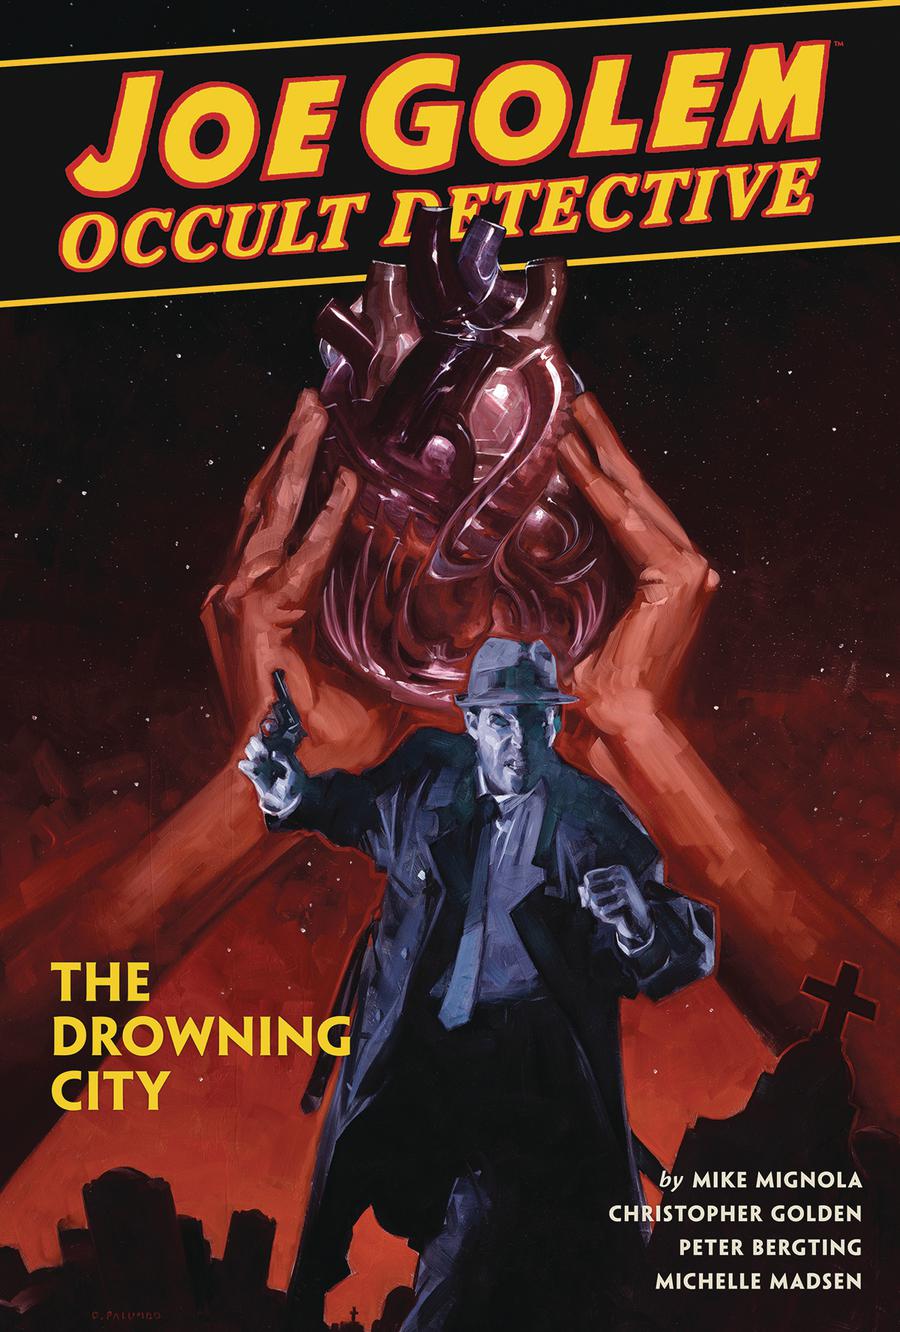 Joe Golem Occult Detective Vol 3 Drowning City HC